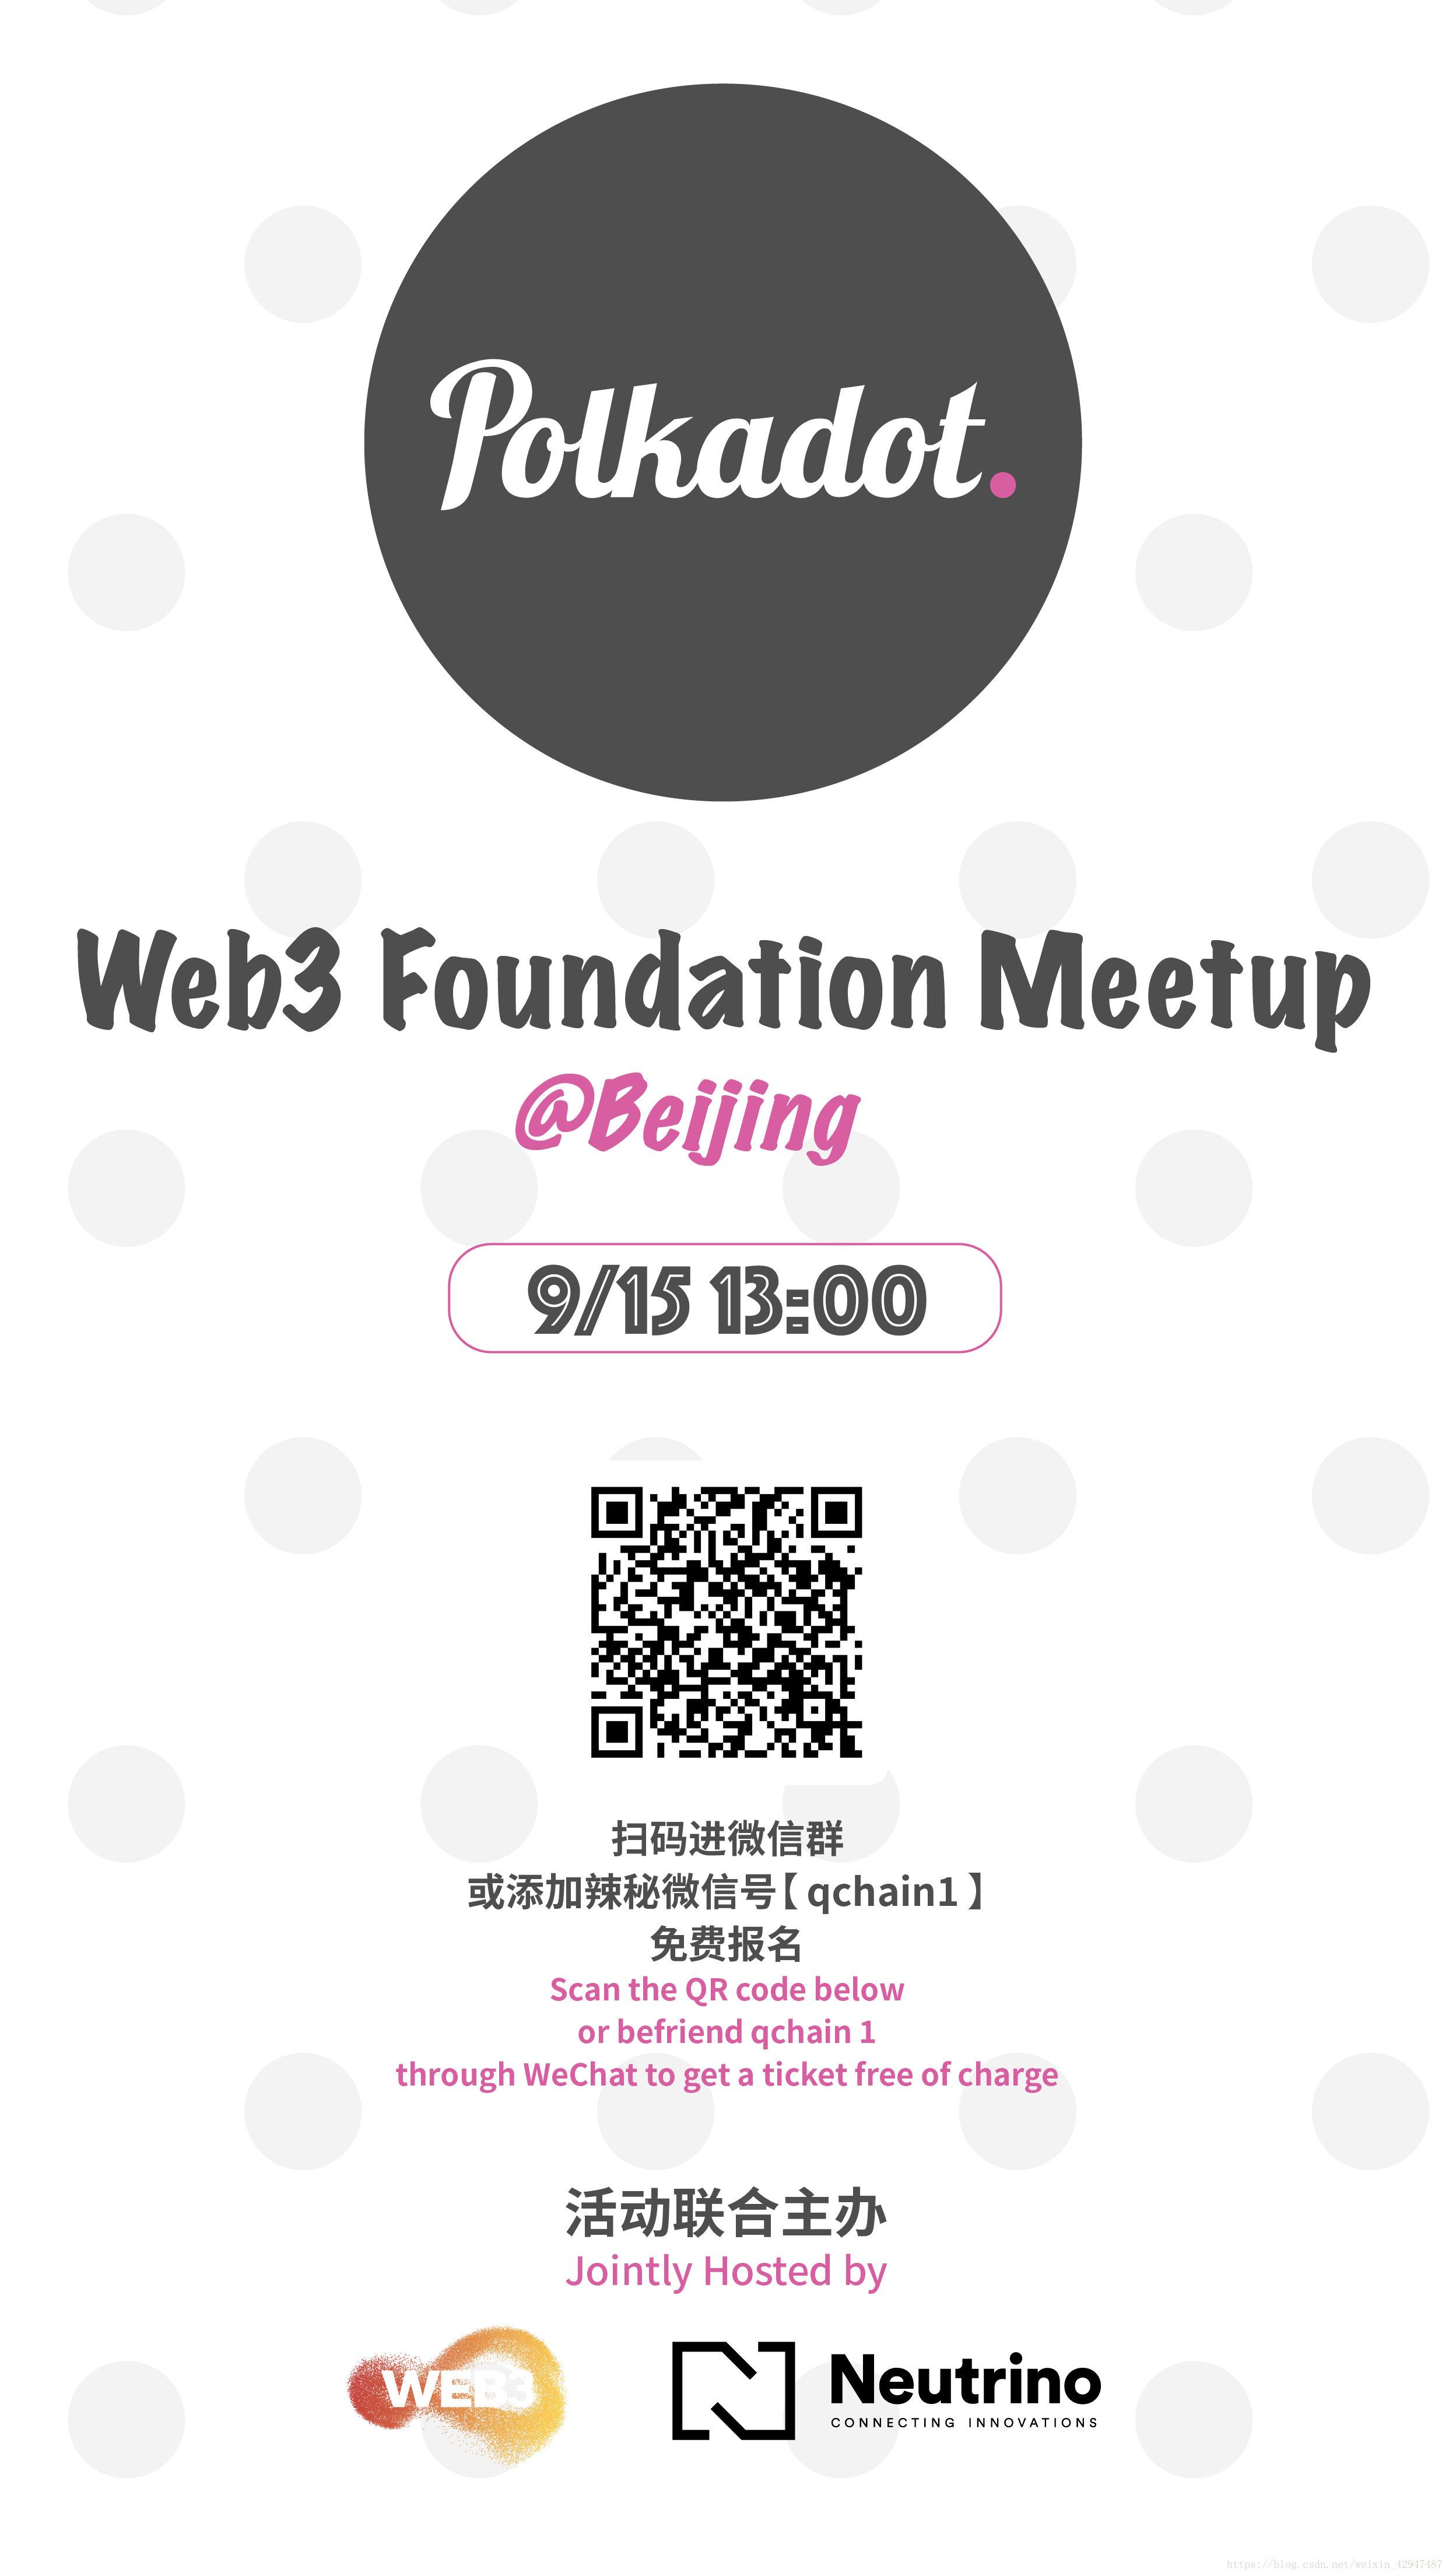 Web3 Foundation Meetup @Beijing